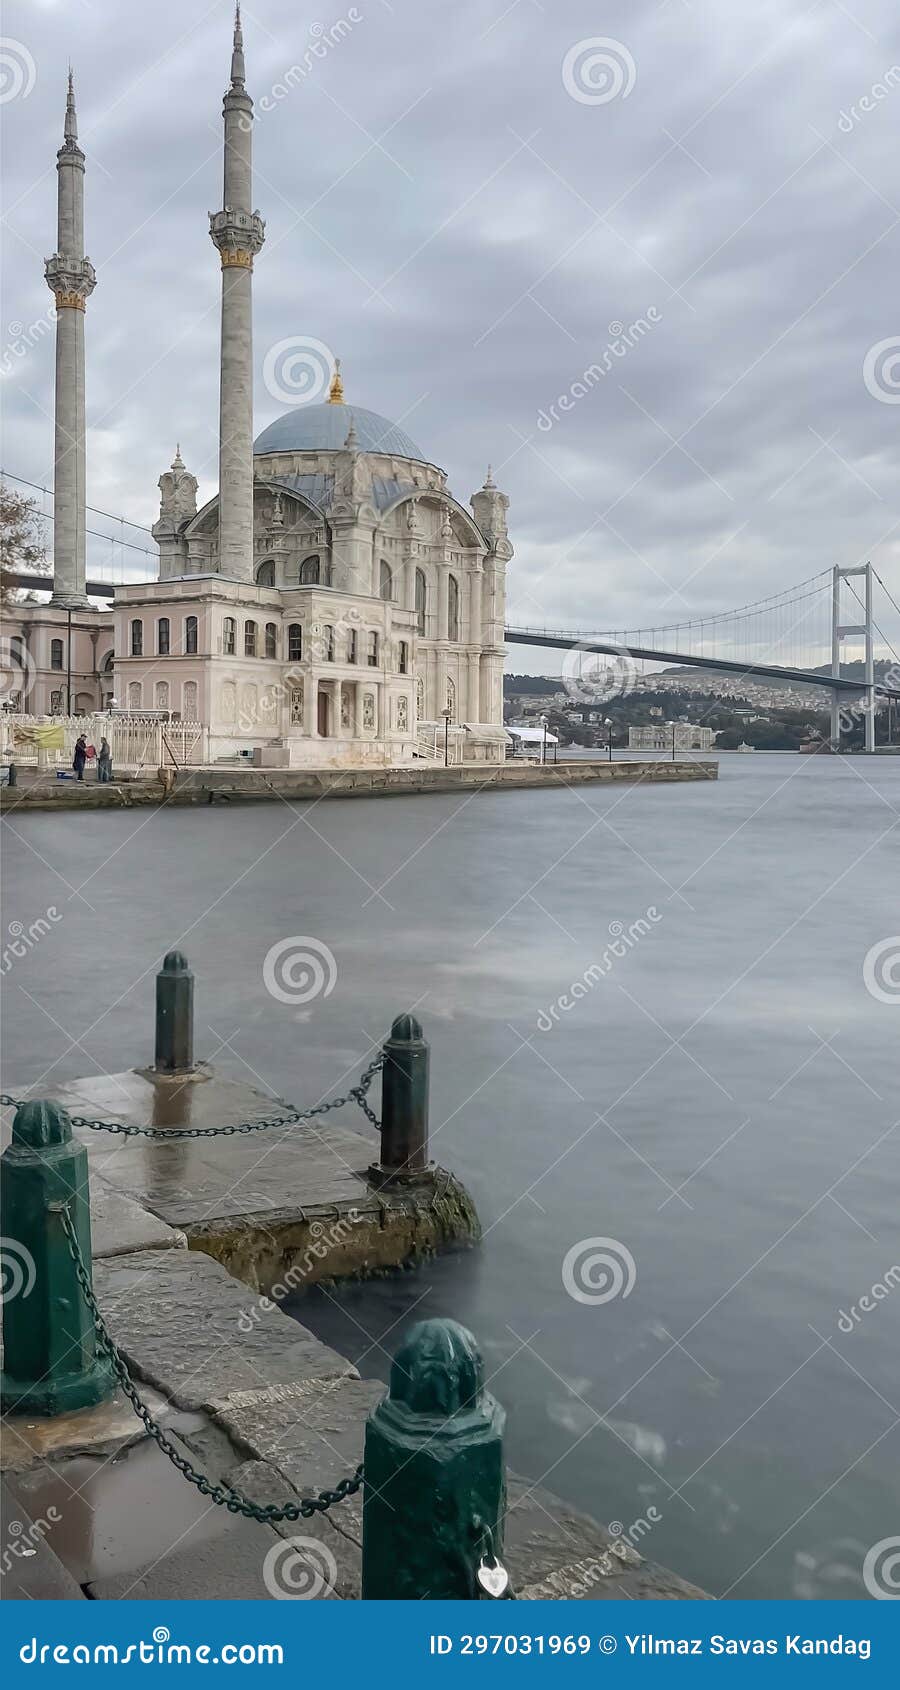 mecidiye mosque or ortakoy mosque in istanbul.